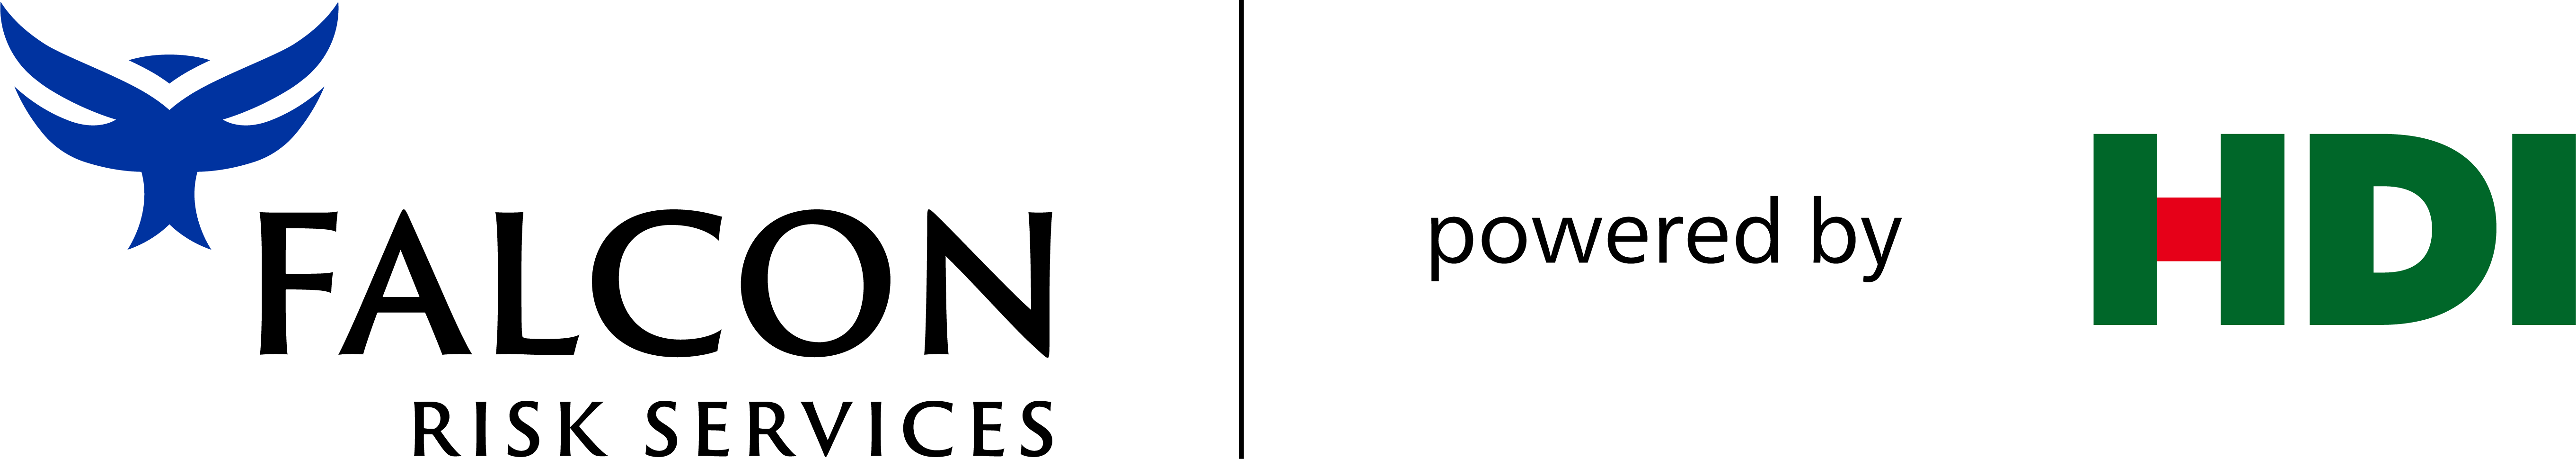 FRS-HDI-logo-more-space-horiz-blue-black-RGB-1